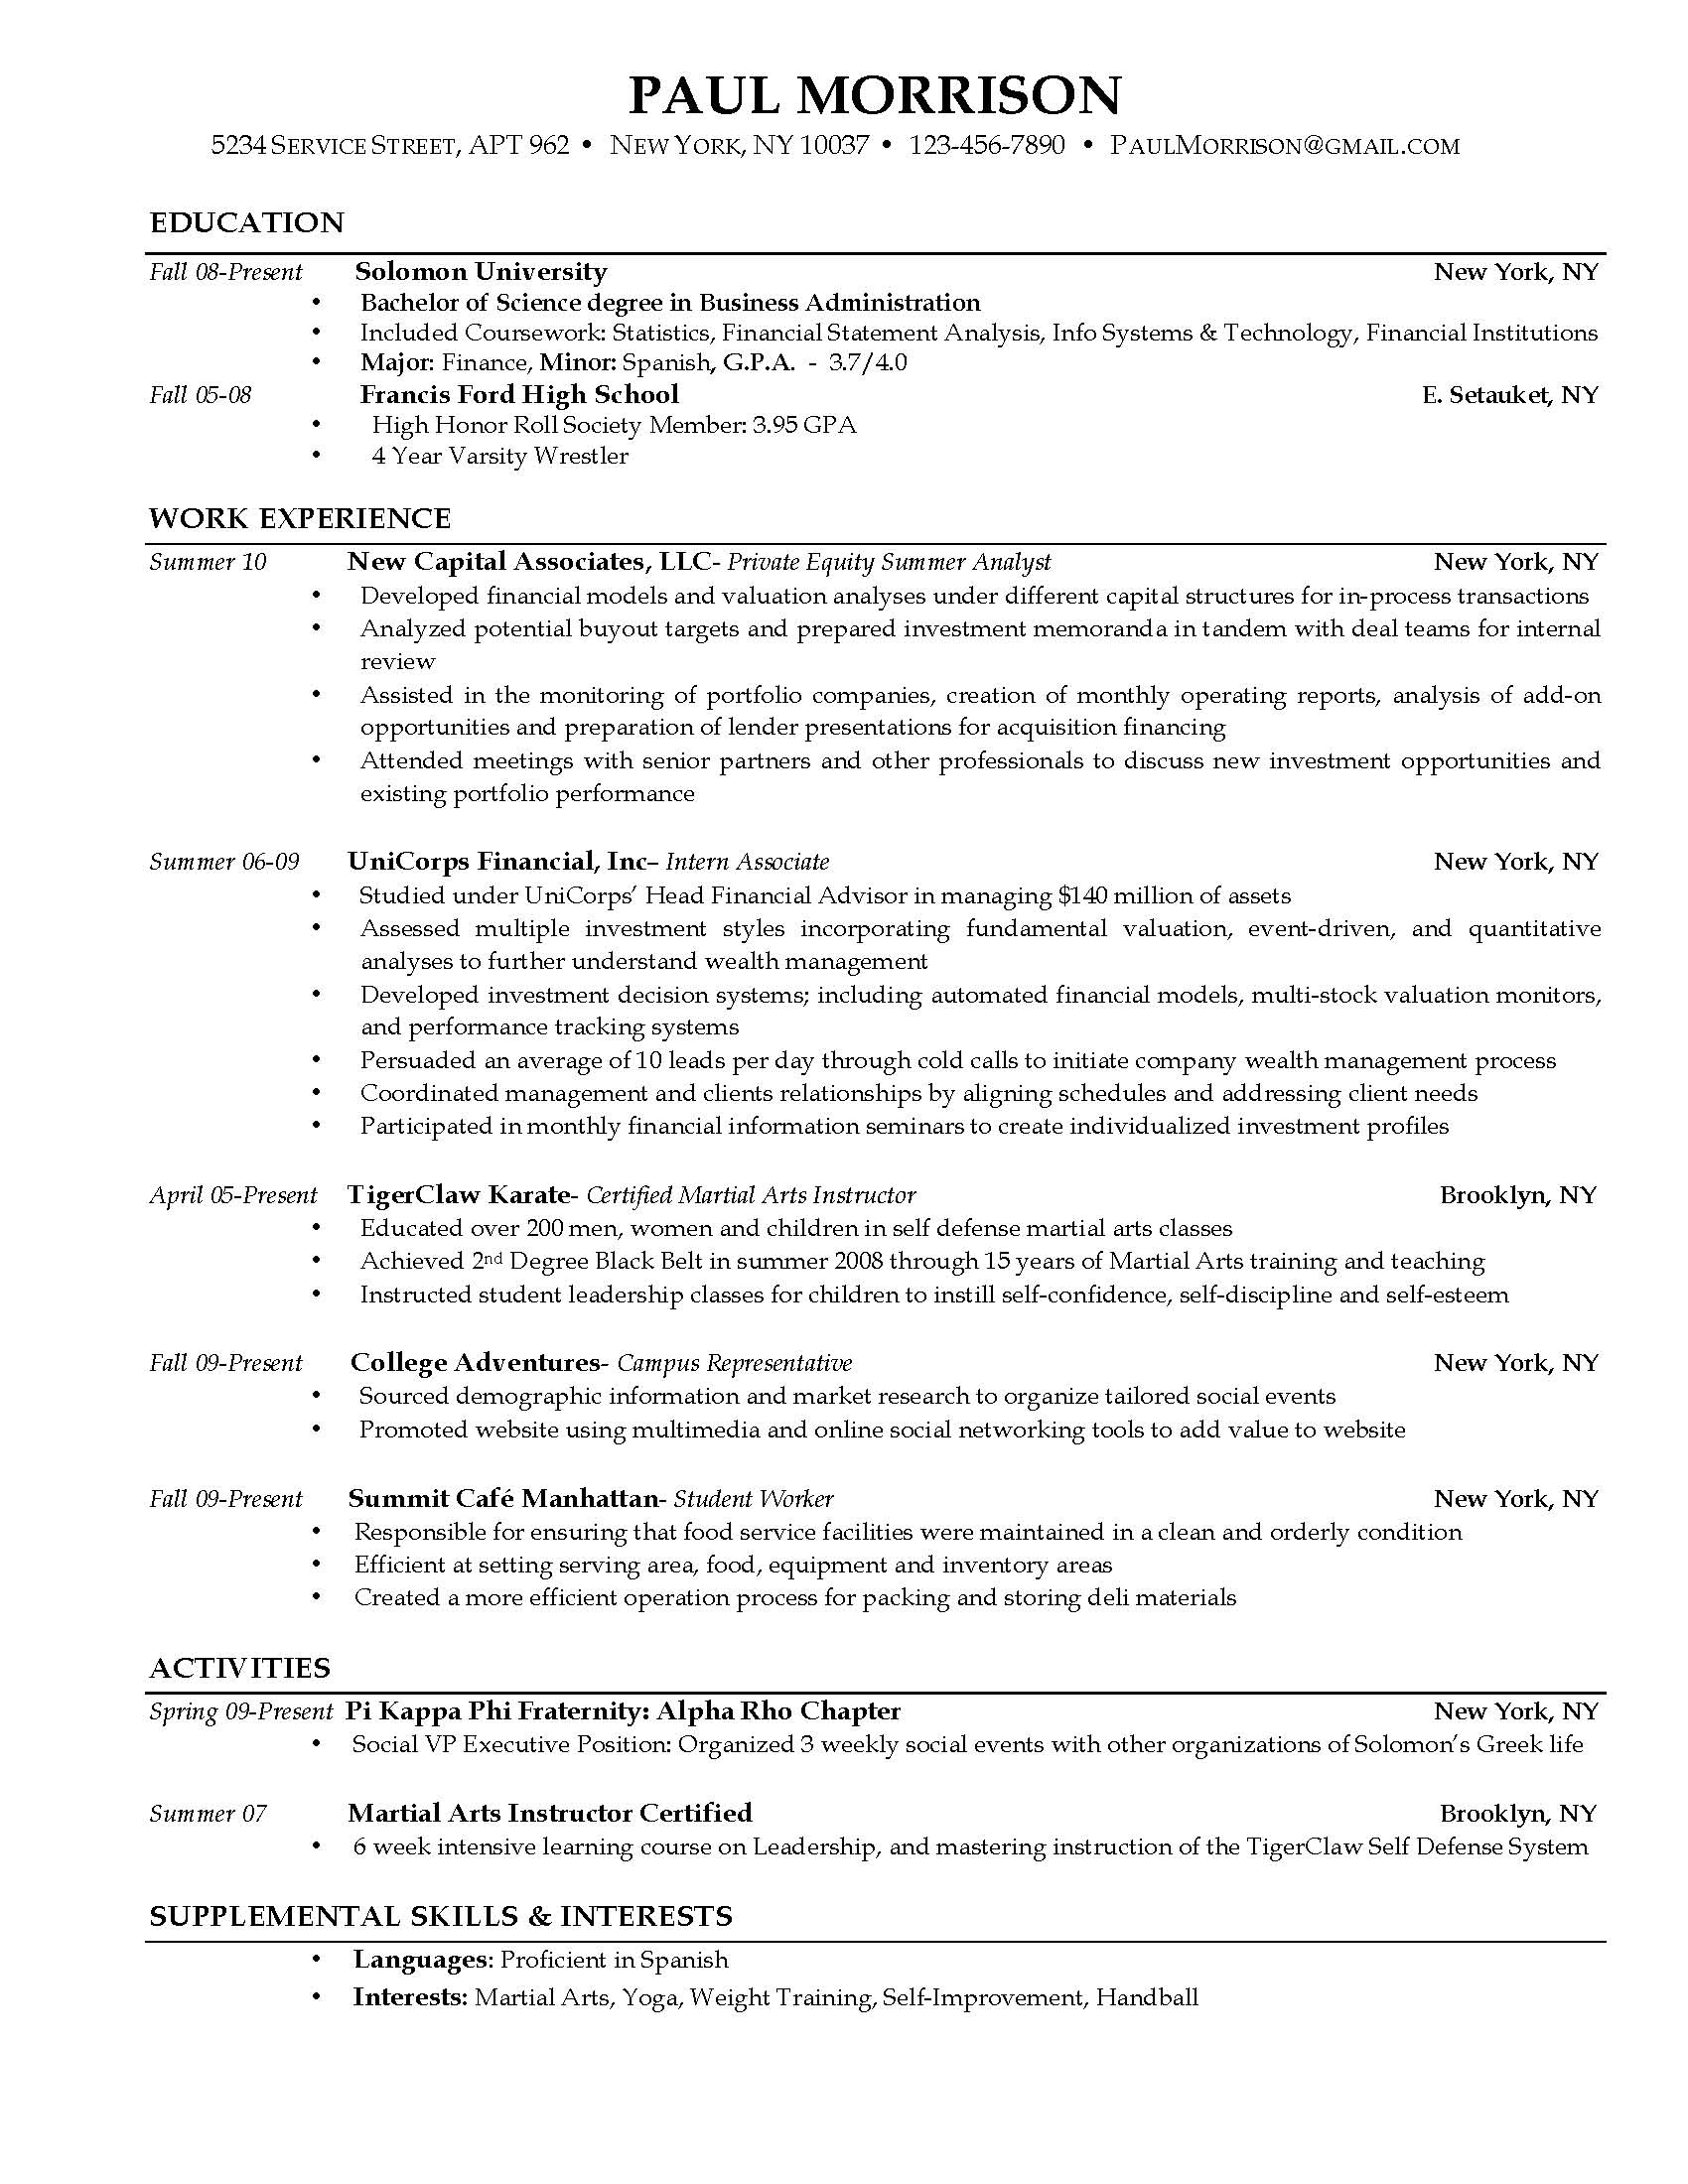 jobresumeweb  resume for college students